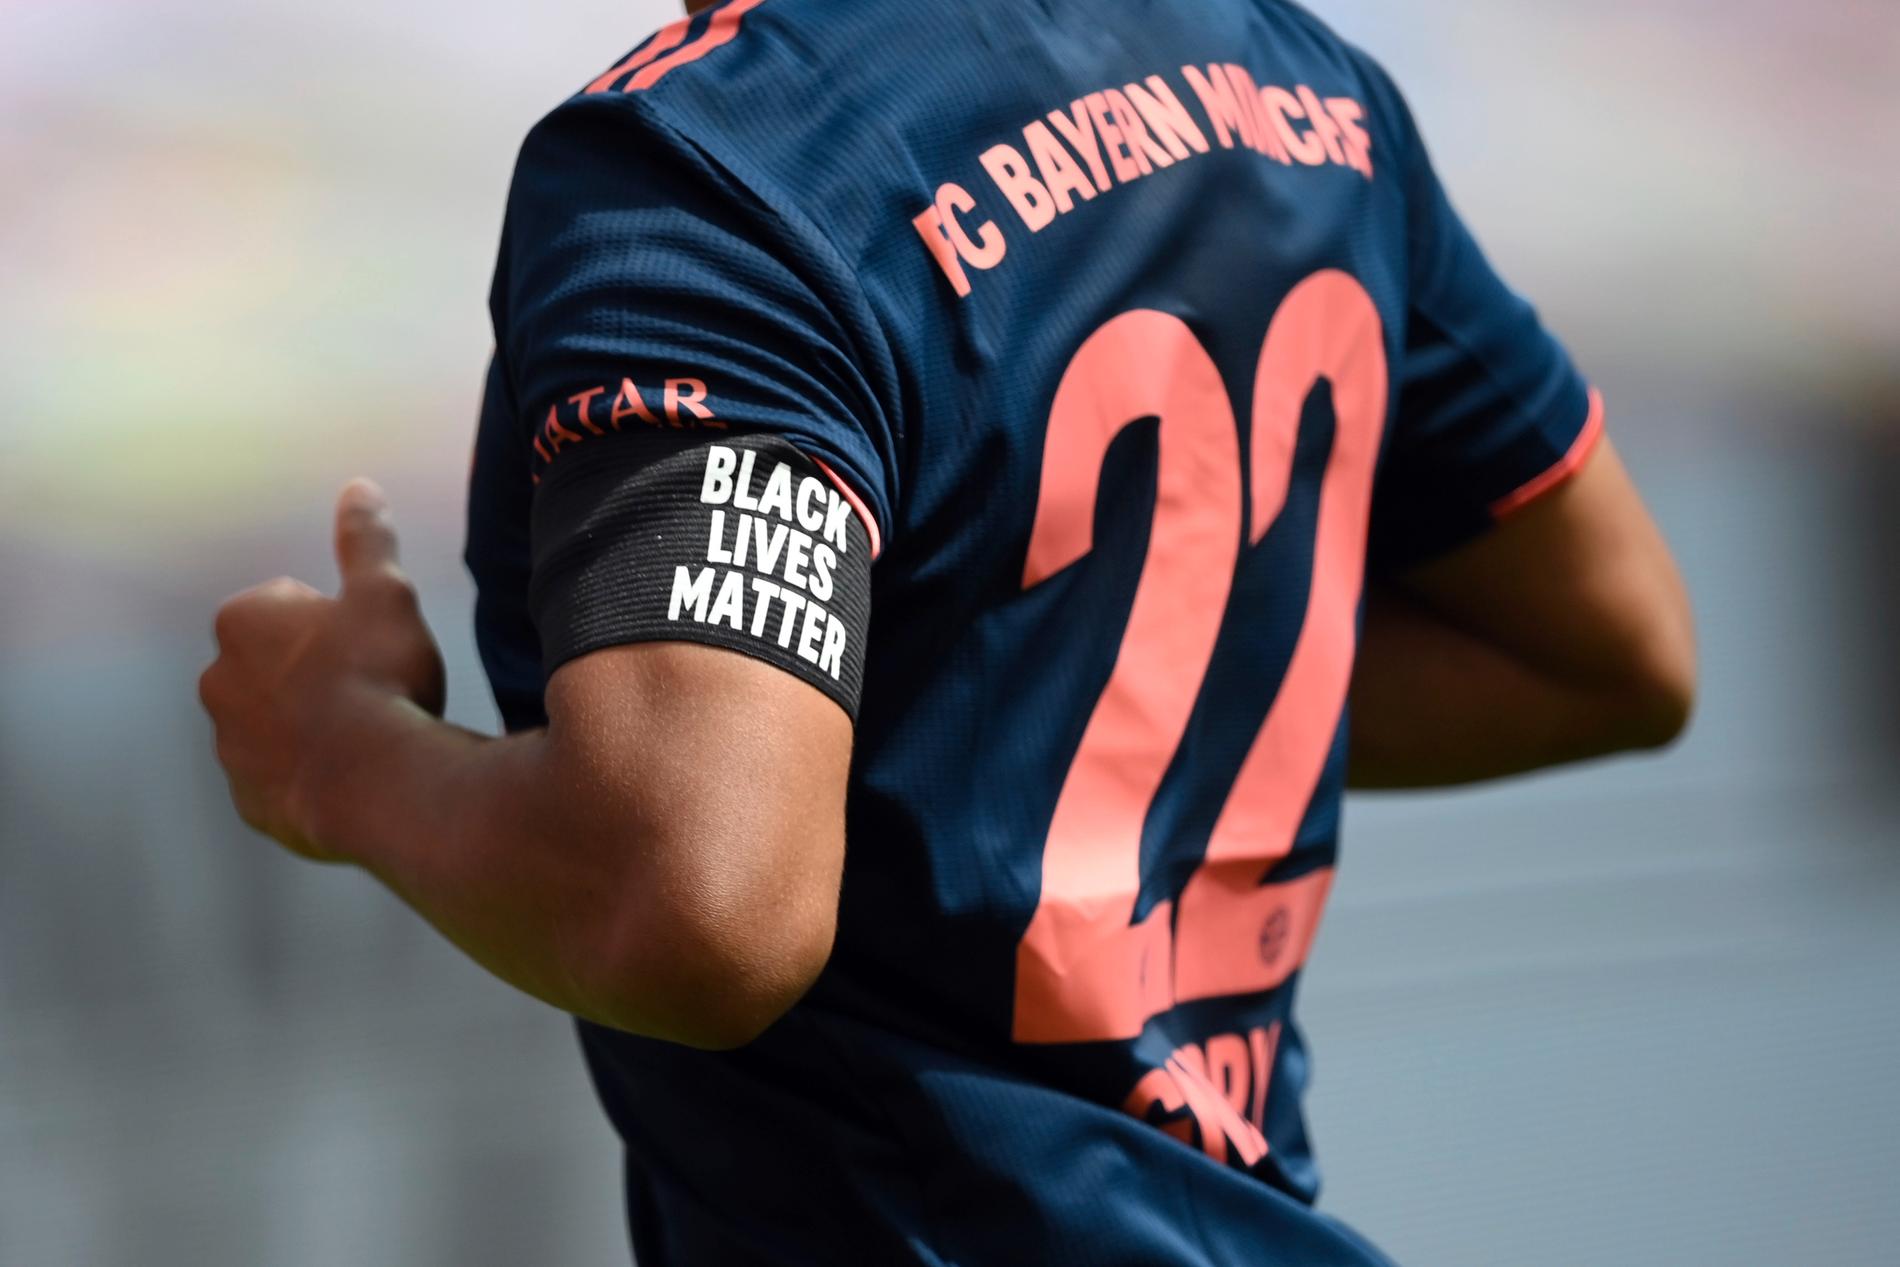 Bayern Münchens spelare, här Serge Gnabry, bar sorgband med texten Black Lives Matter i matchen mot Bayer Leverkusen.